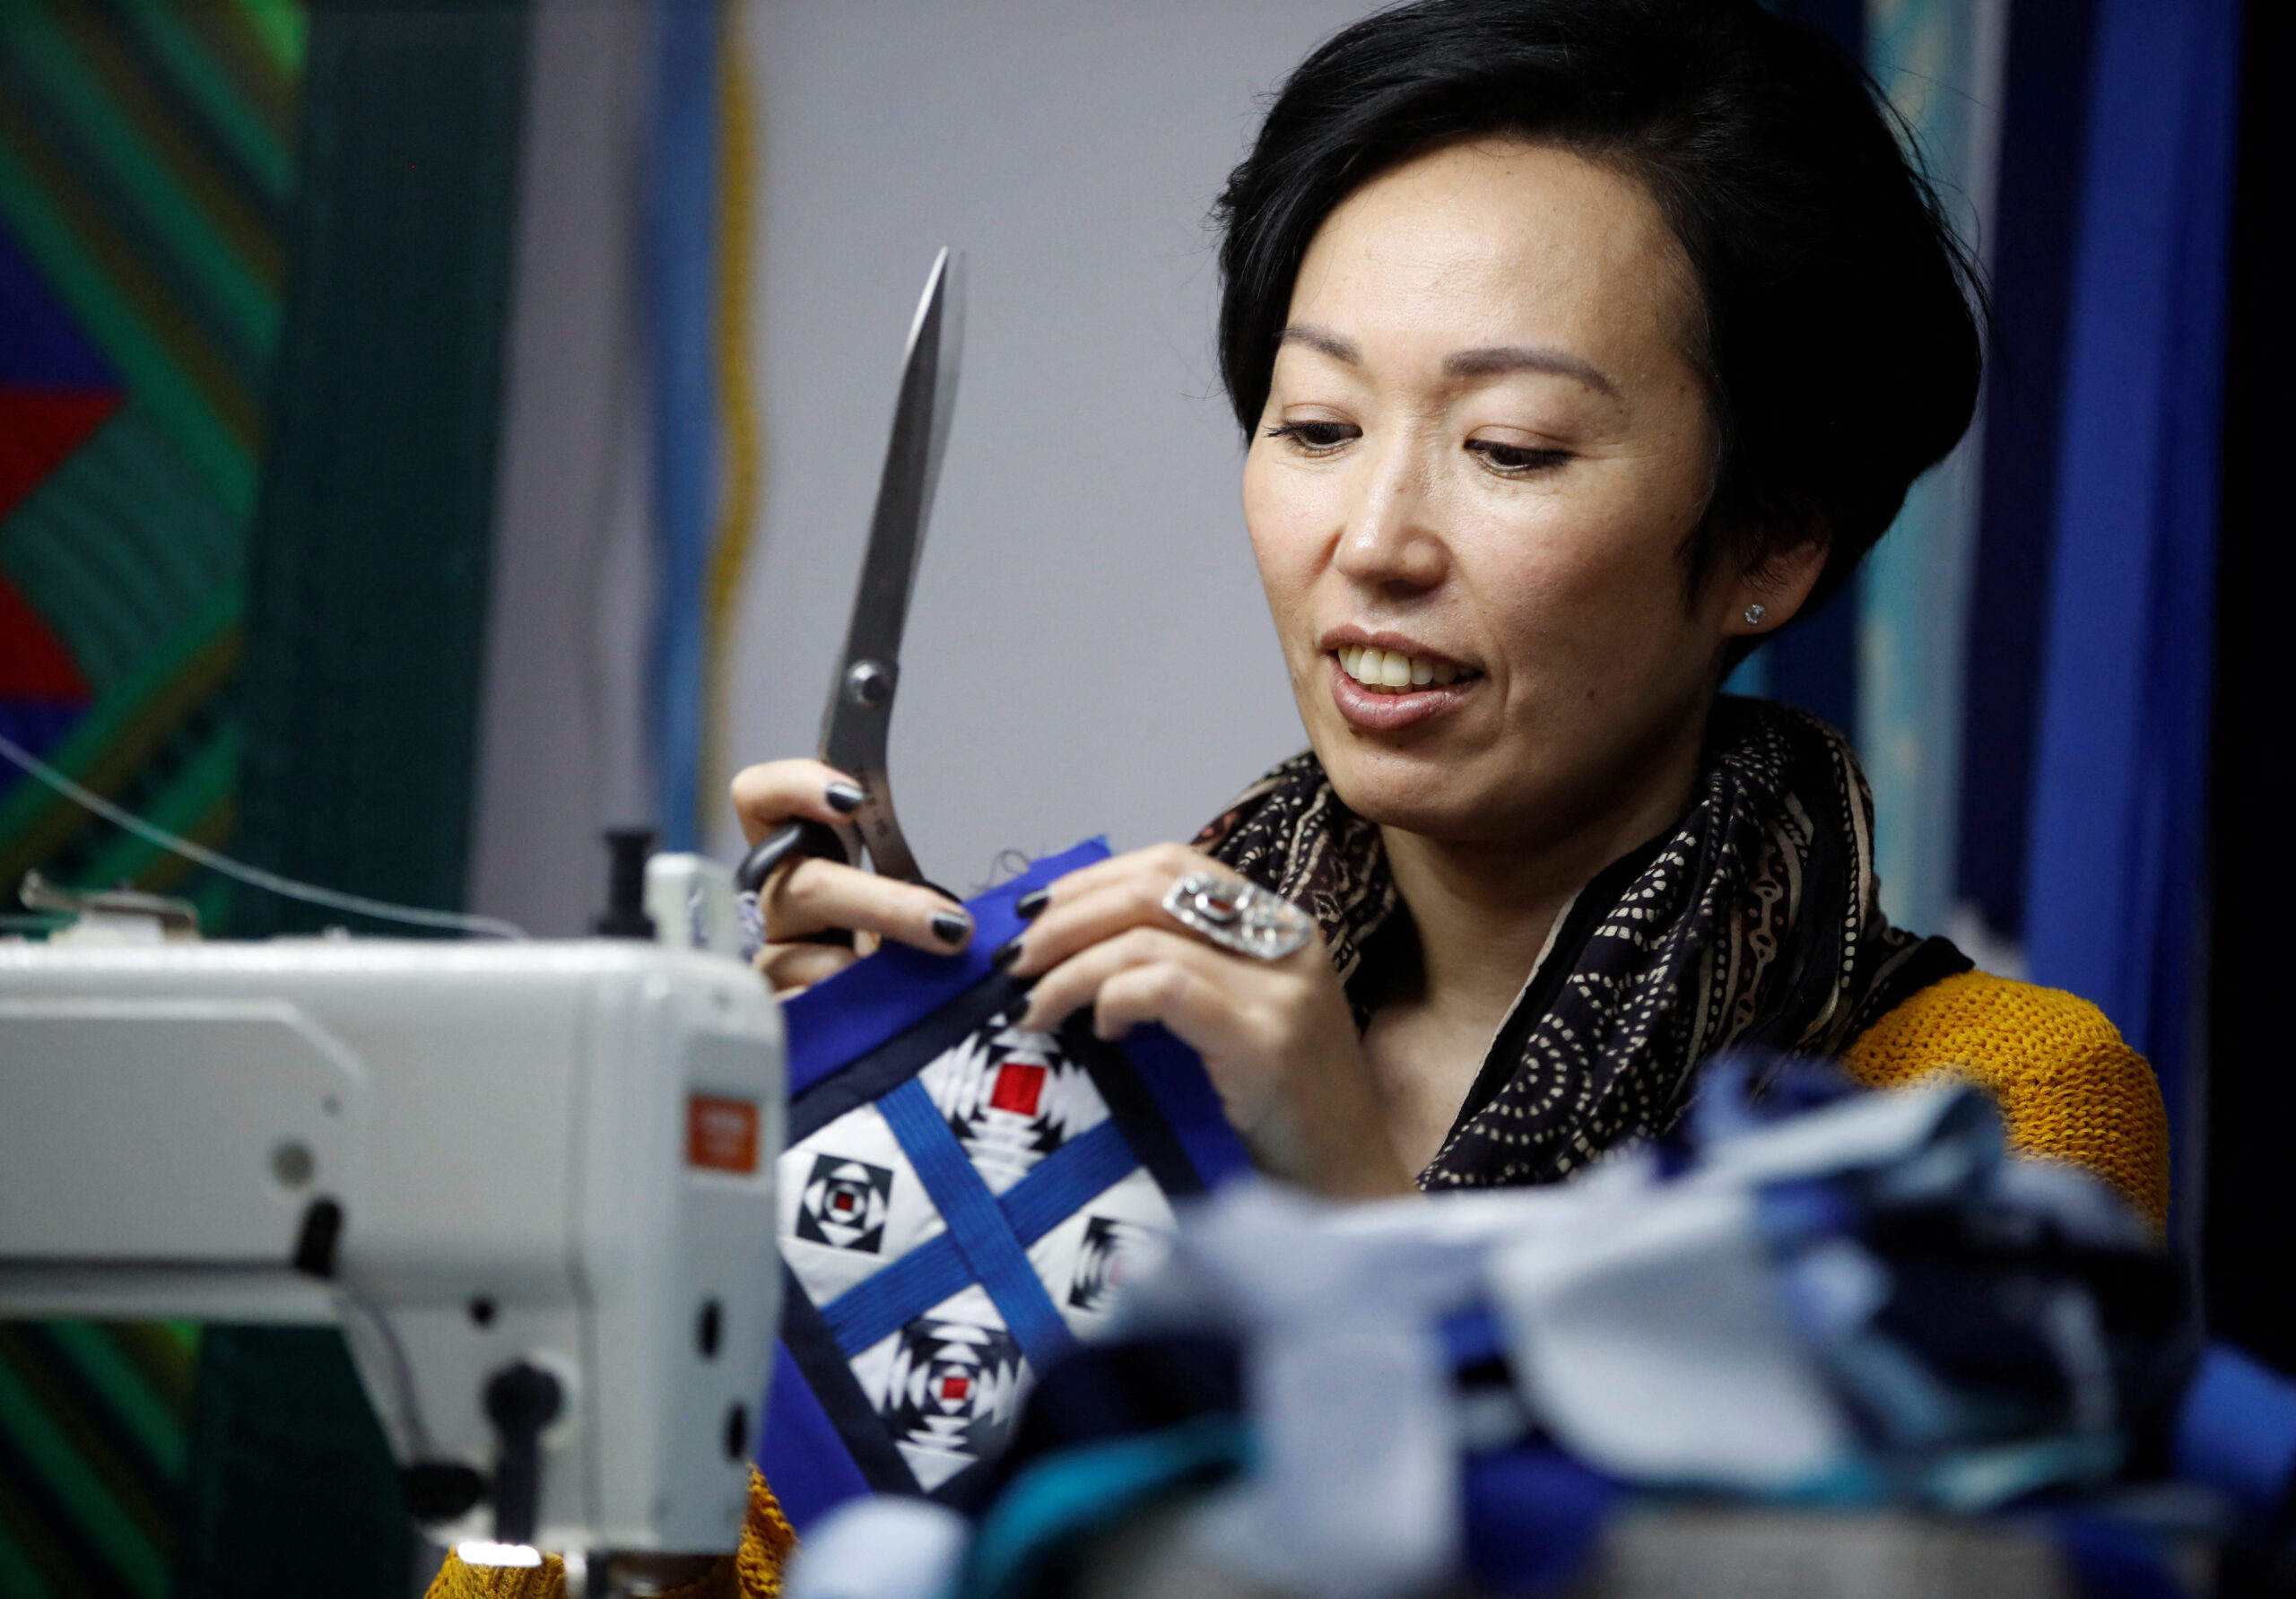 Kyrgyz artist and environmental activist Cholpon Alamanova sews in her workshop in Bishkek